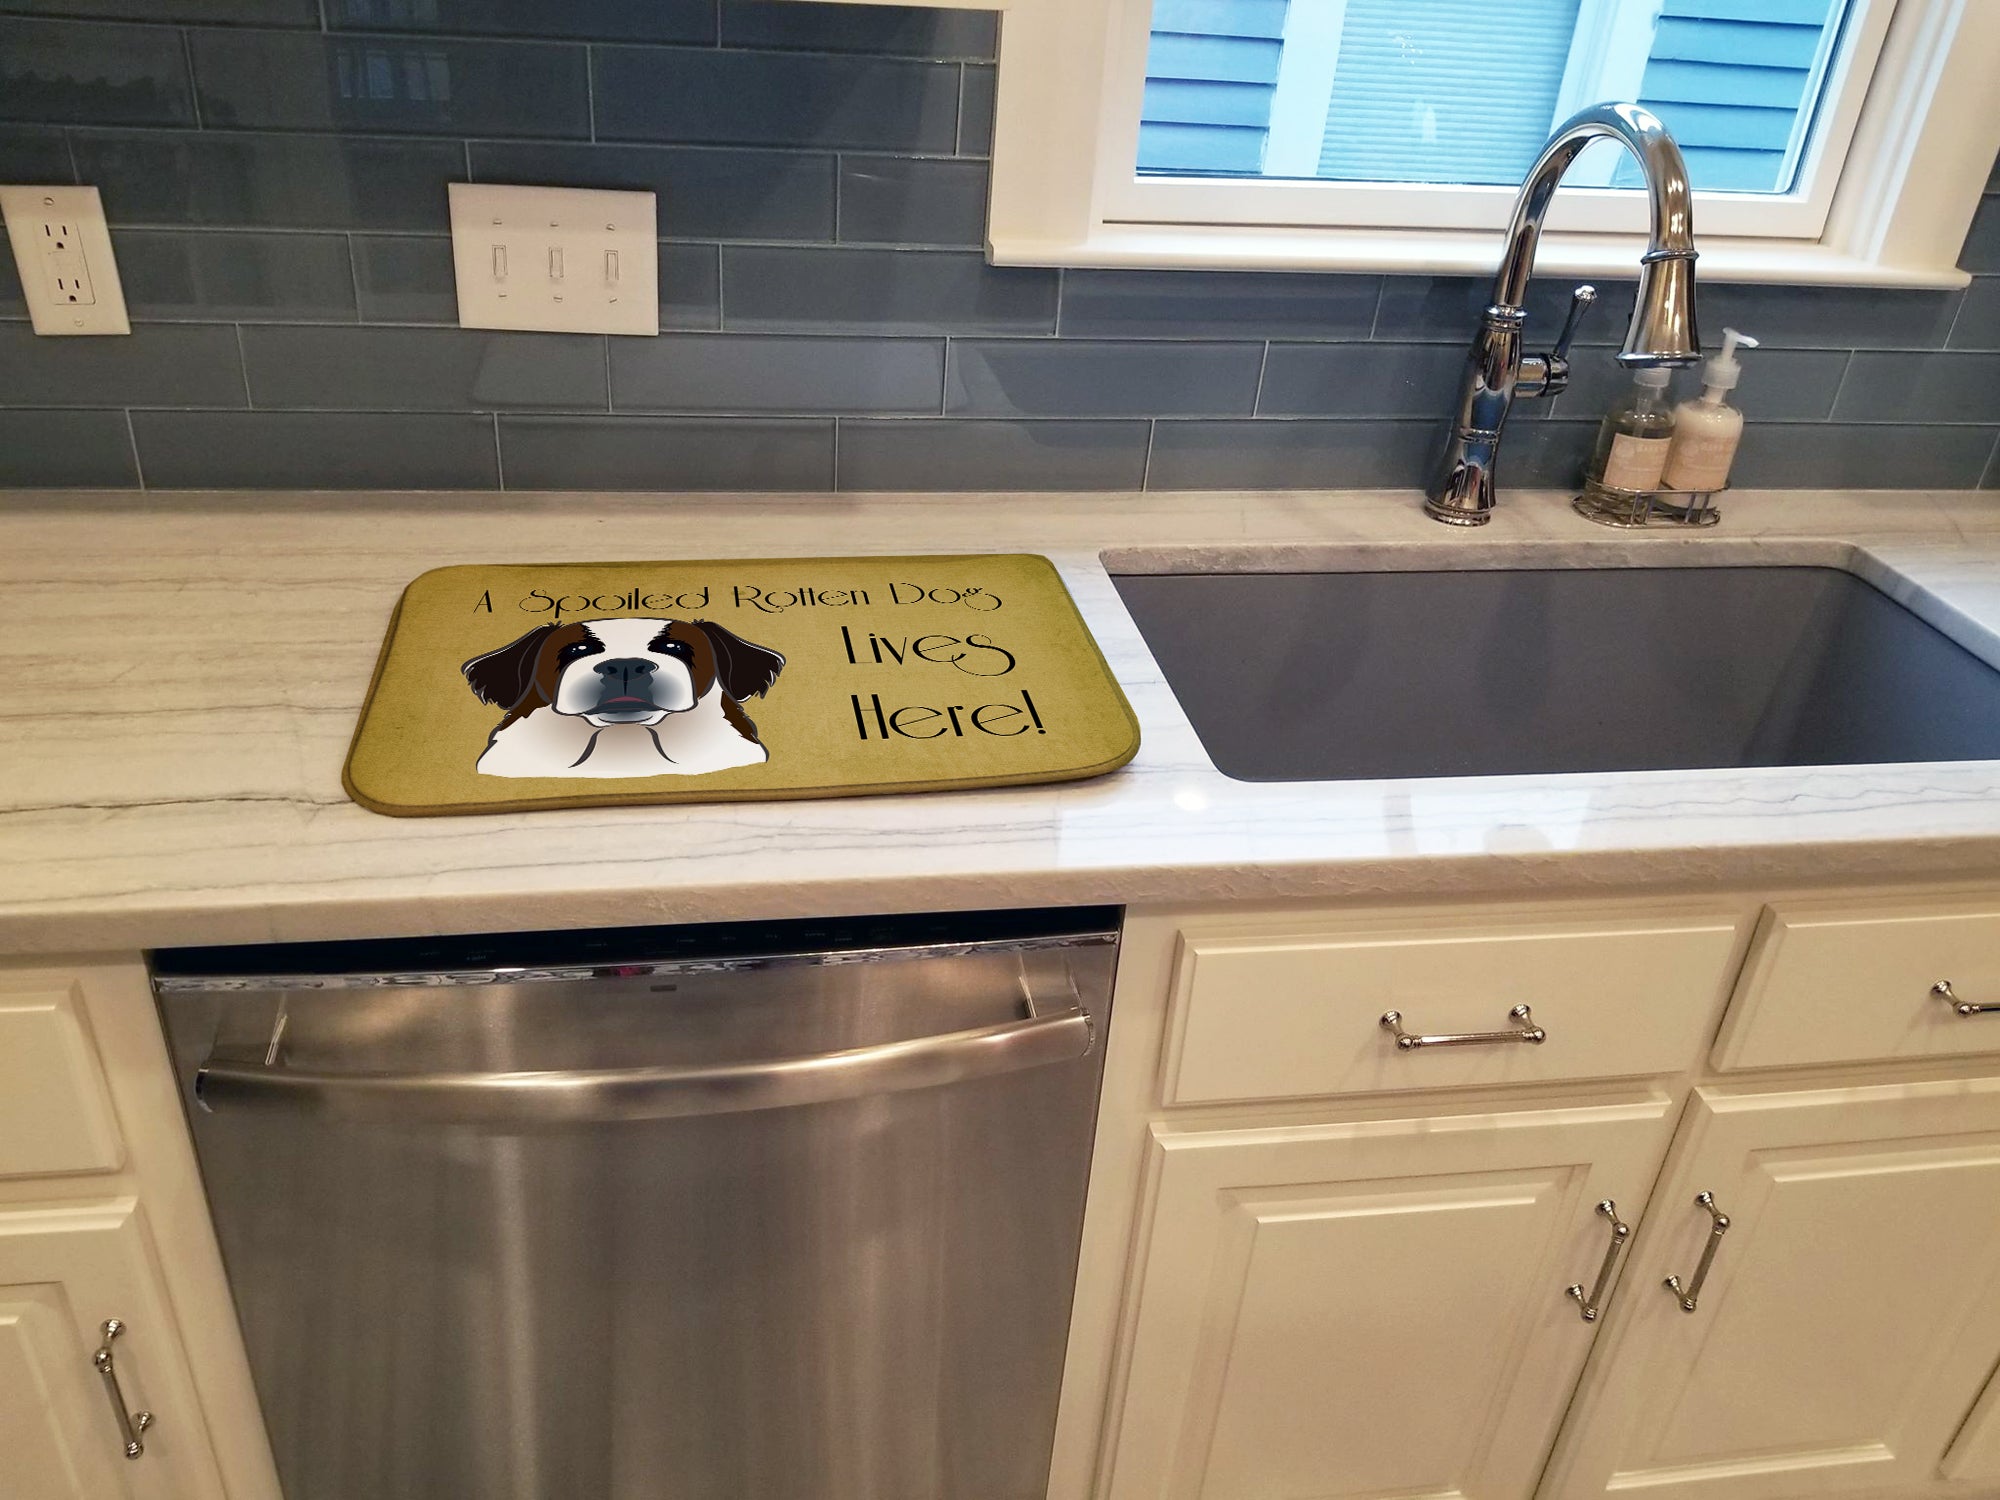 Saint Bernard Spoiled Dog Lives Here Dish Drying Mat BB1494DDM